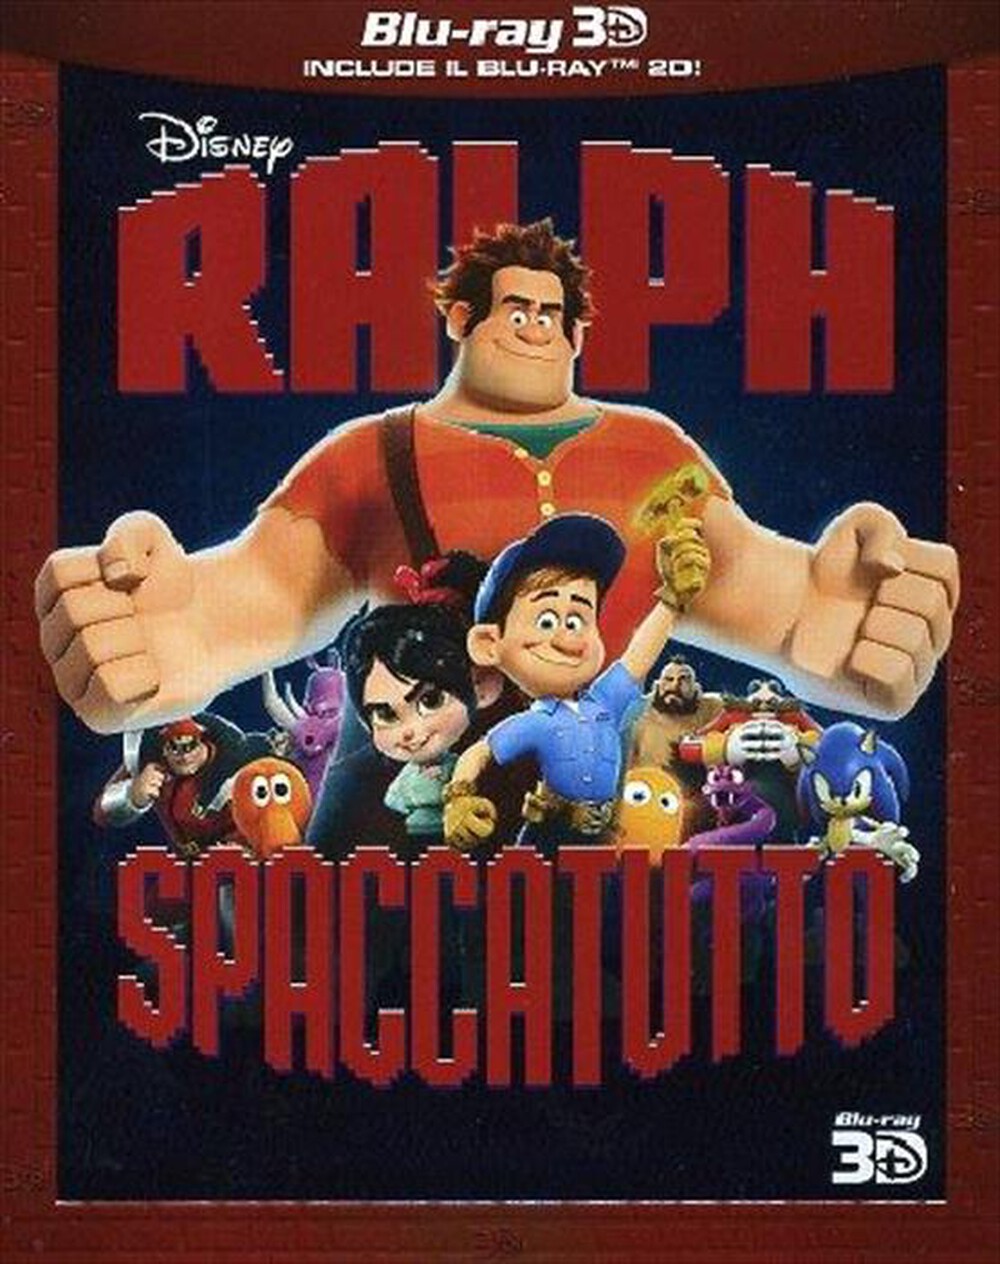 "WALT DISNEY - Ralph Spaccatutto (Blu-Ray 3D+Blu-Ray)"